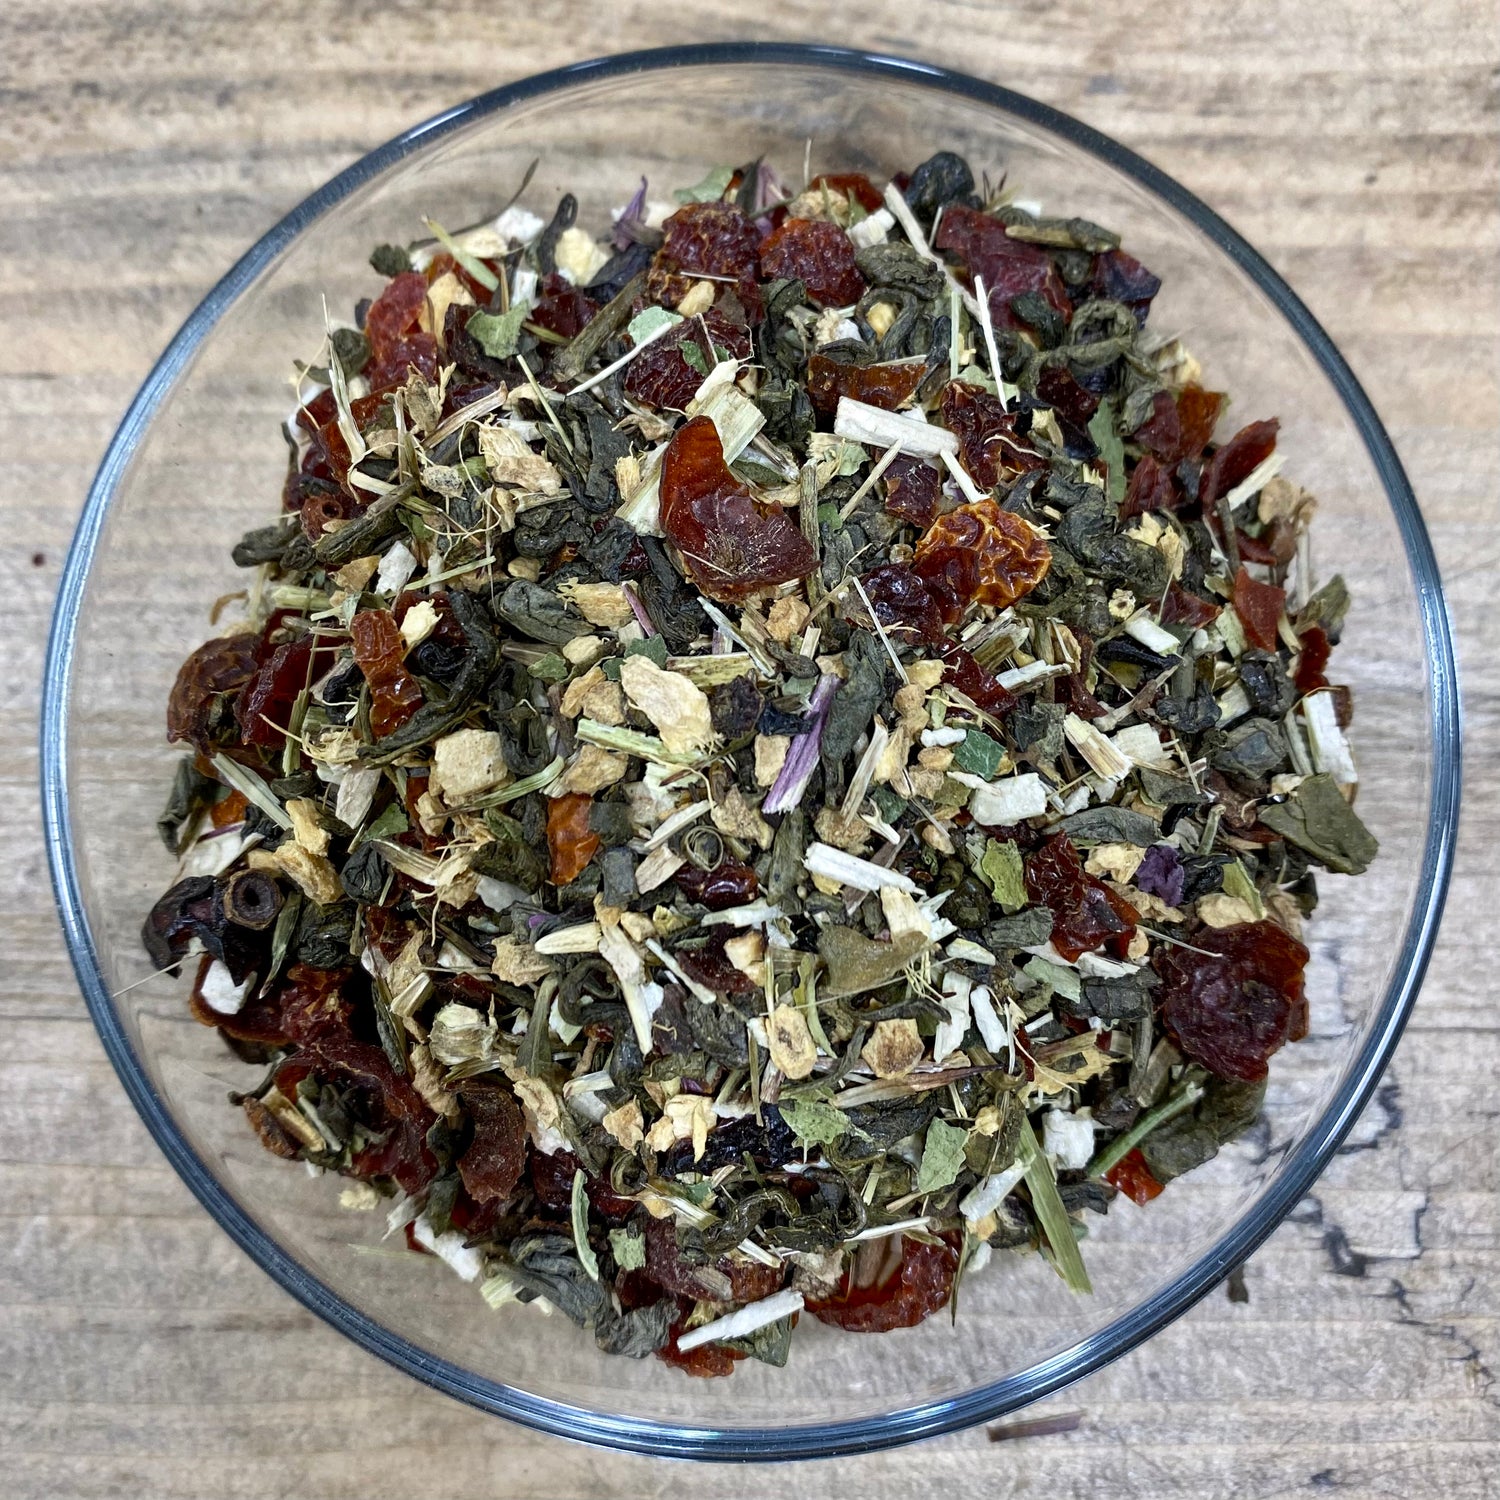 immune tea herbal infusion health cold flu newquay tea and leaves cornwall eco kraft bag